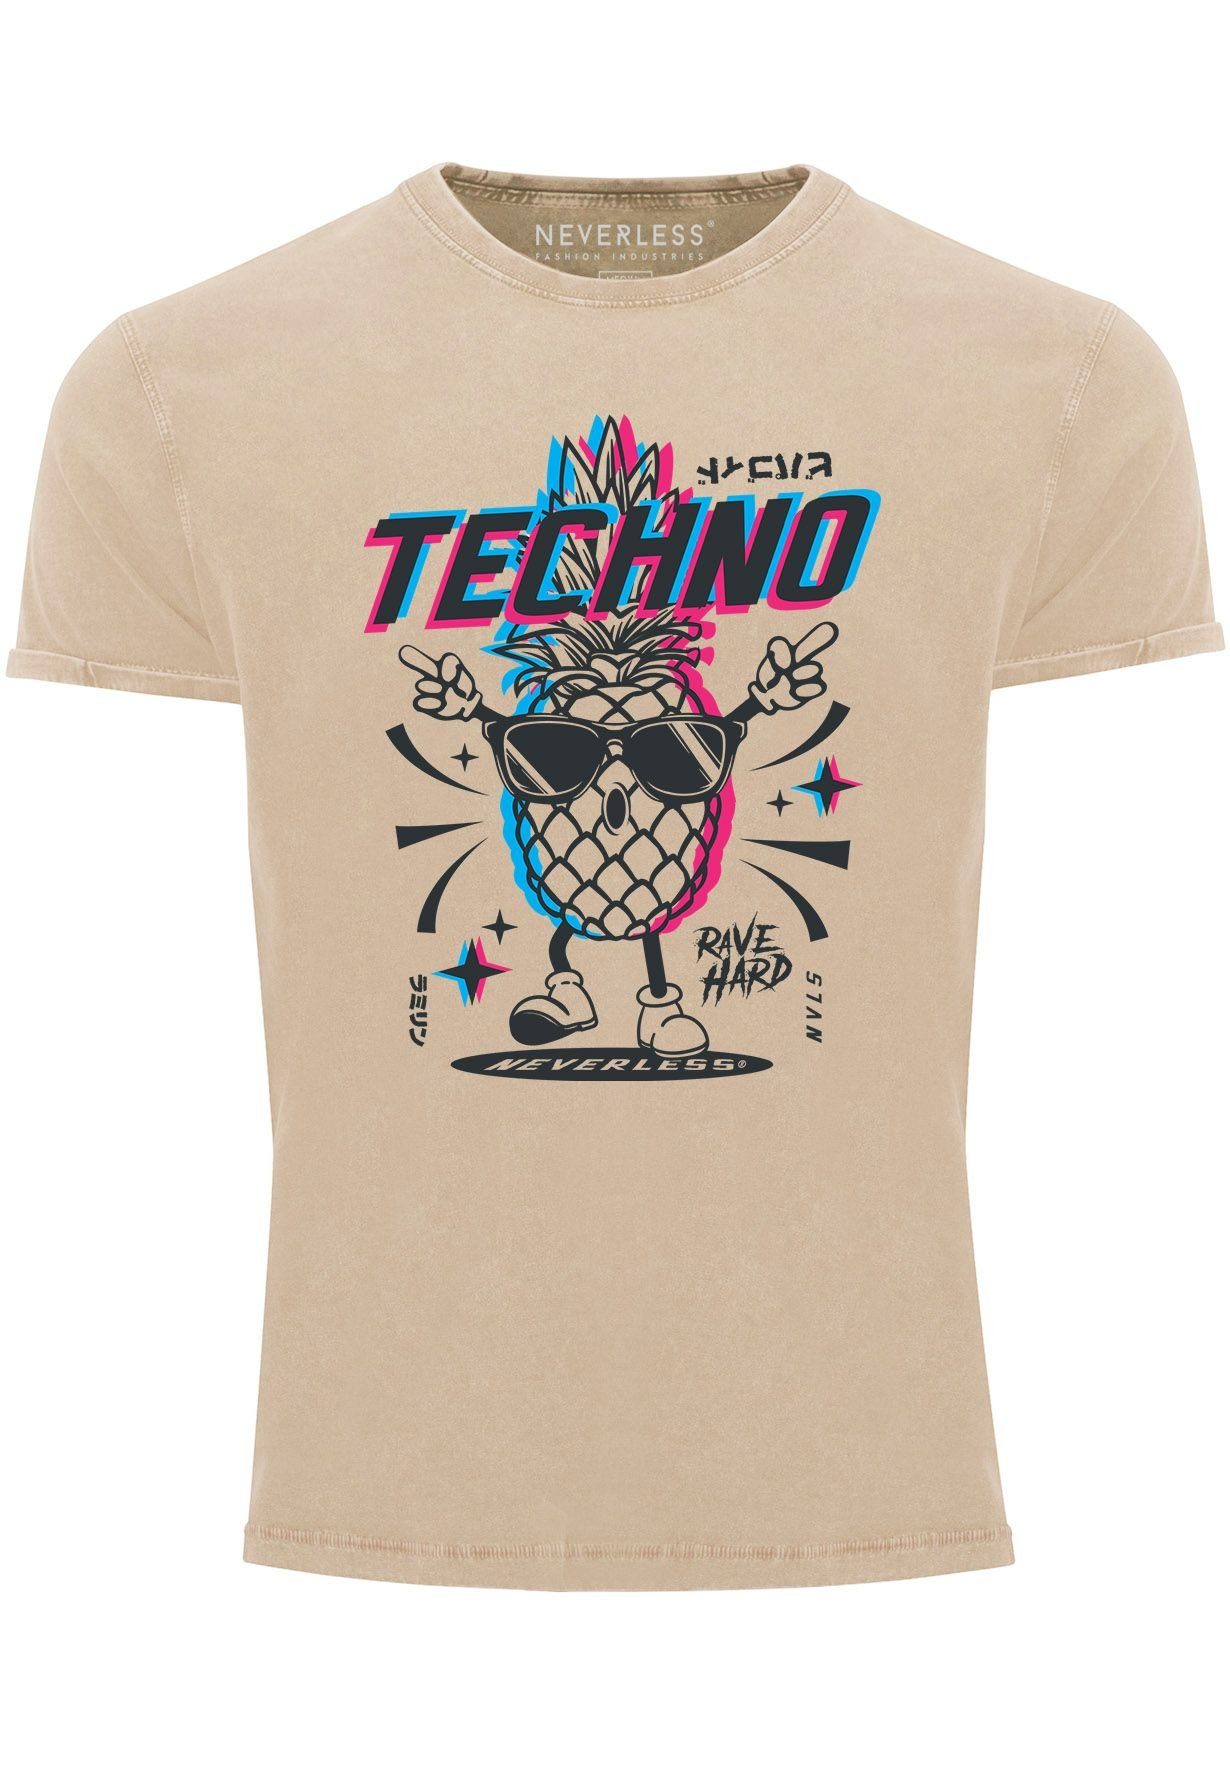 Neverless Print-Shirt Herren Vintage Shirt Techno Tanzen Lustig Ananas Rave Party Printshirt mit Print natur